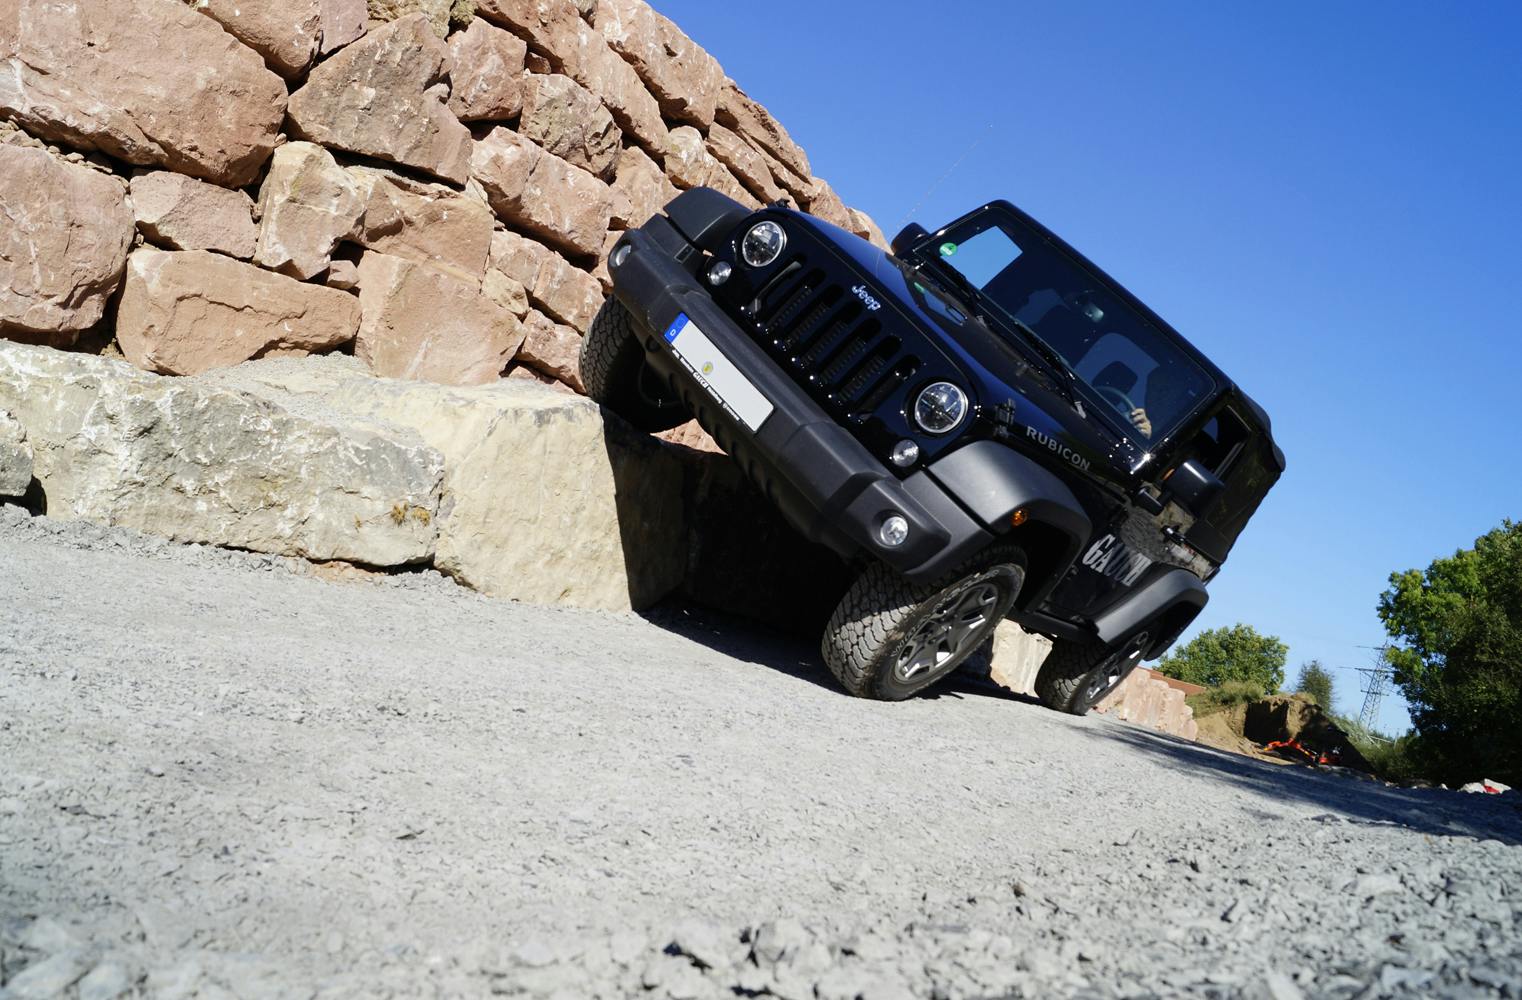 Jeep Wrangler Rubicon fahren | Offroad-Action mit Allrad